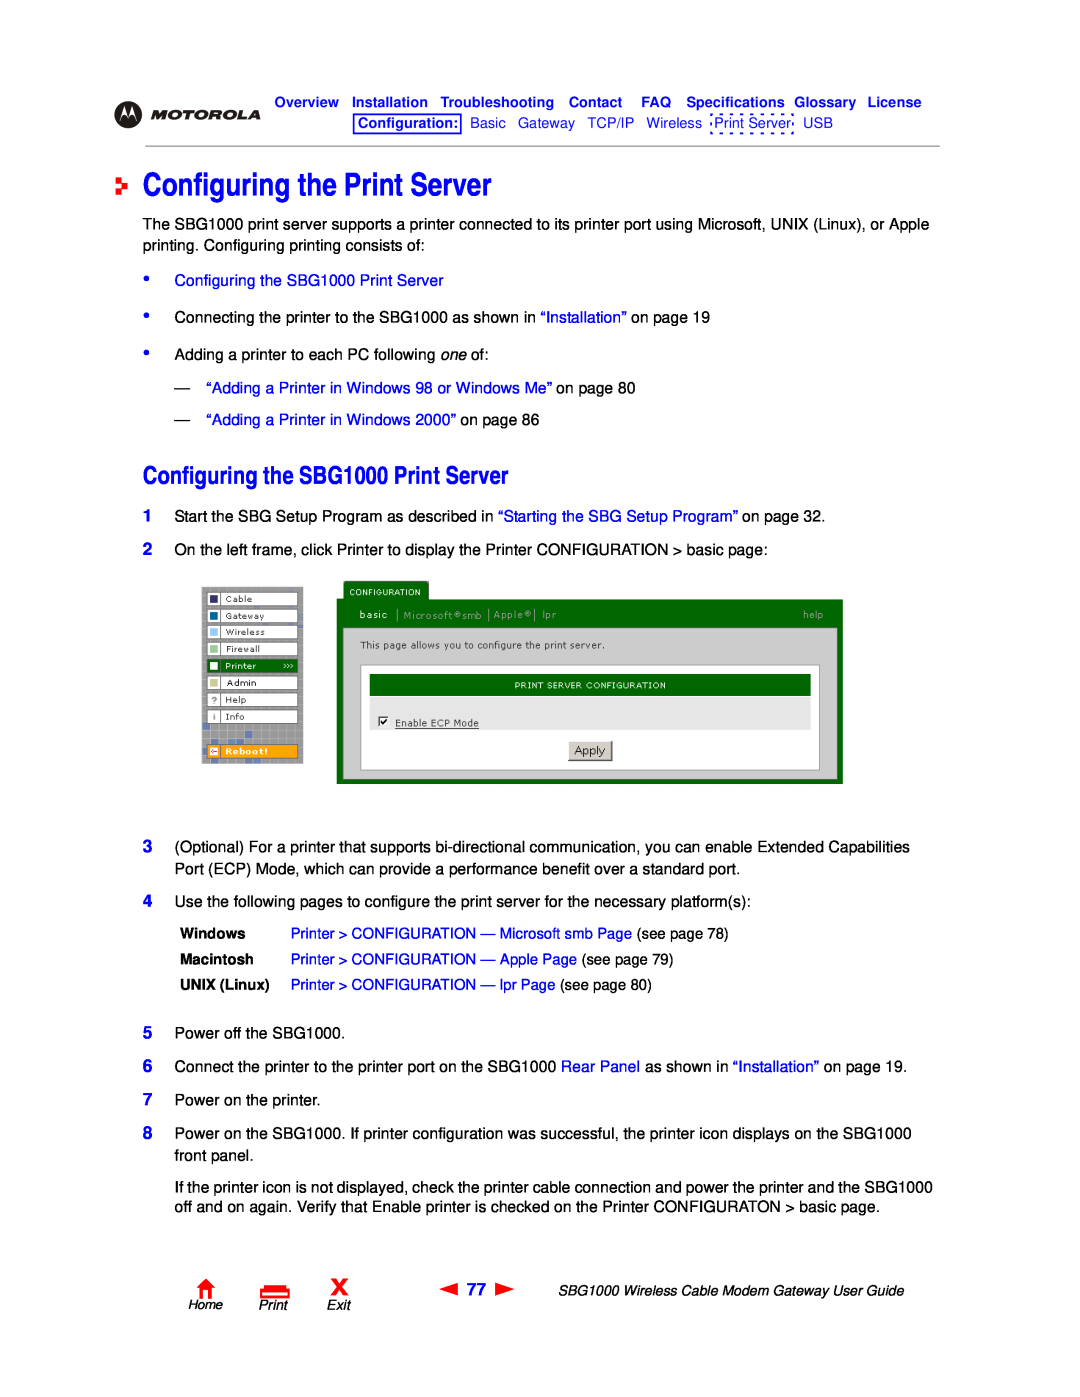 Motorola Configuring the Print Server, Configuring the SBG1000 Print Server, “Adding a Printer in Windows 2000” on page 